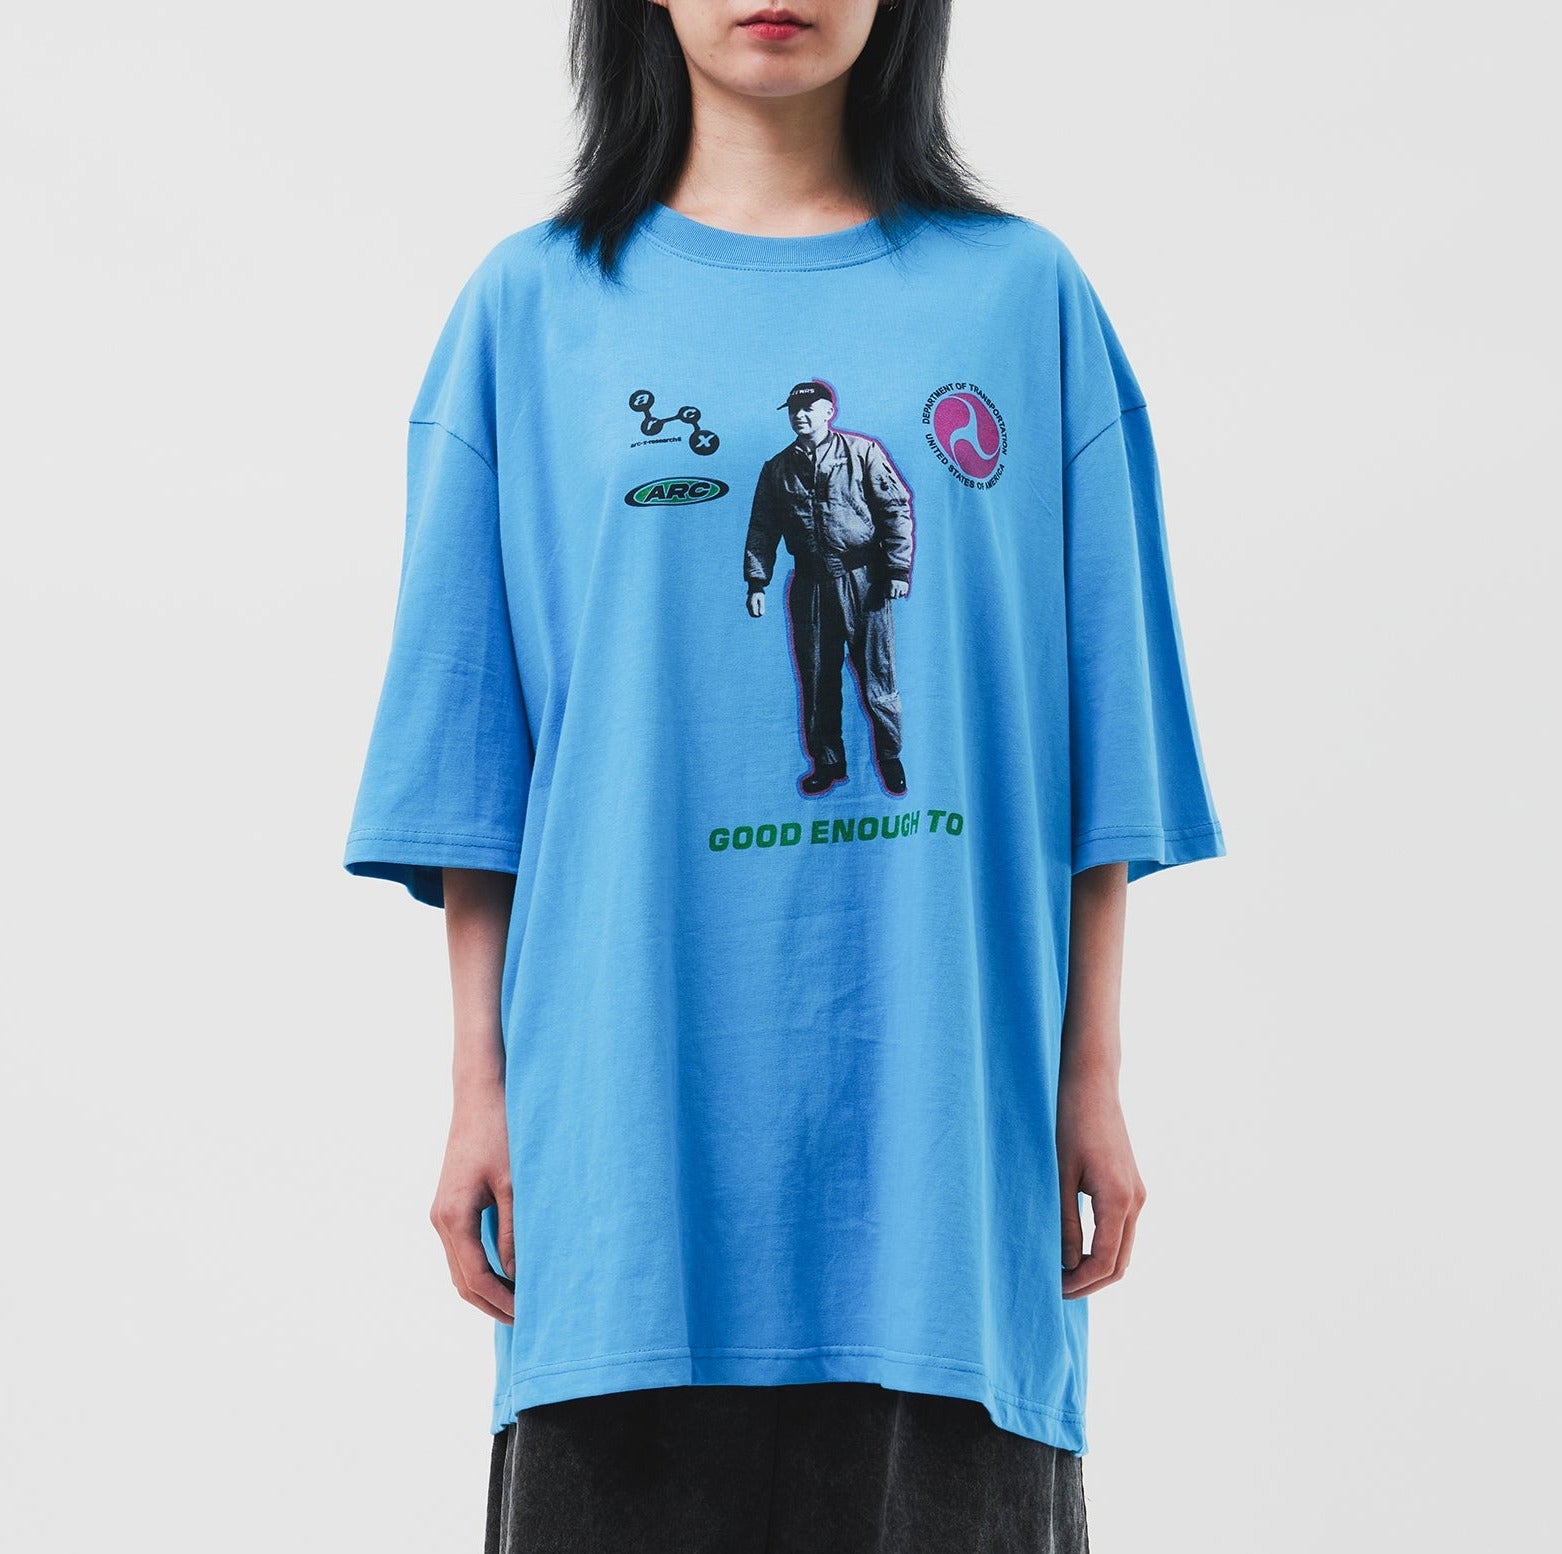 HI FI FNK(ハイファイファンク) - イナッフデジタルプリントTシャツ